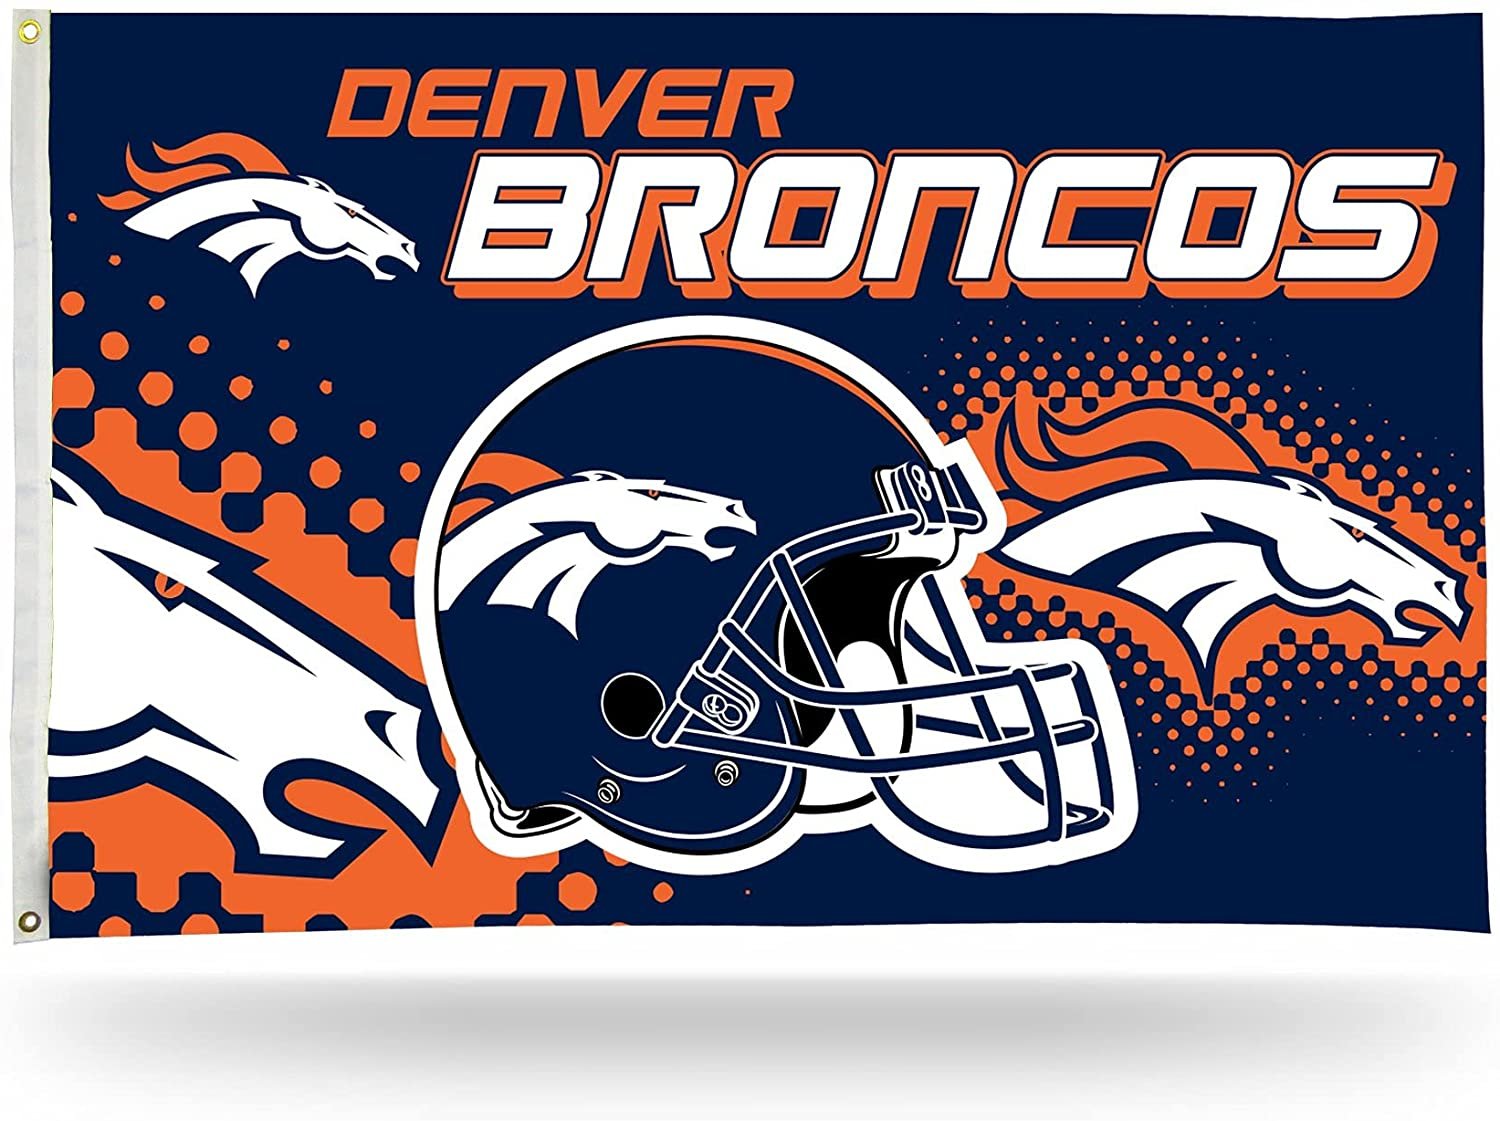 Denver Broncos Premium 3x5 Feet Flag Banner, Helmet Design, Metal Grommets, Outdoor Use, Single Sided